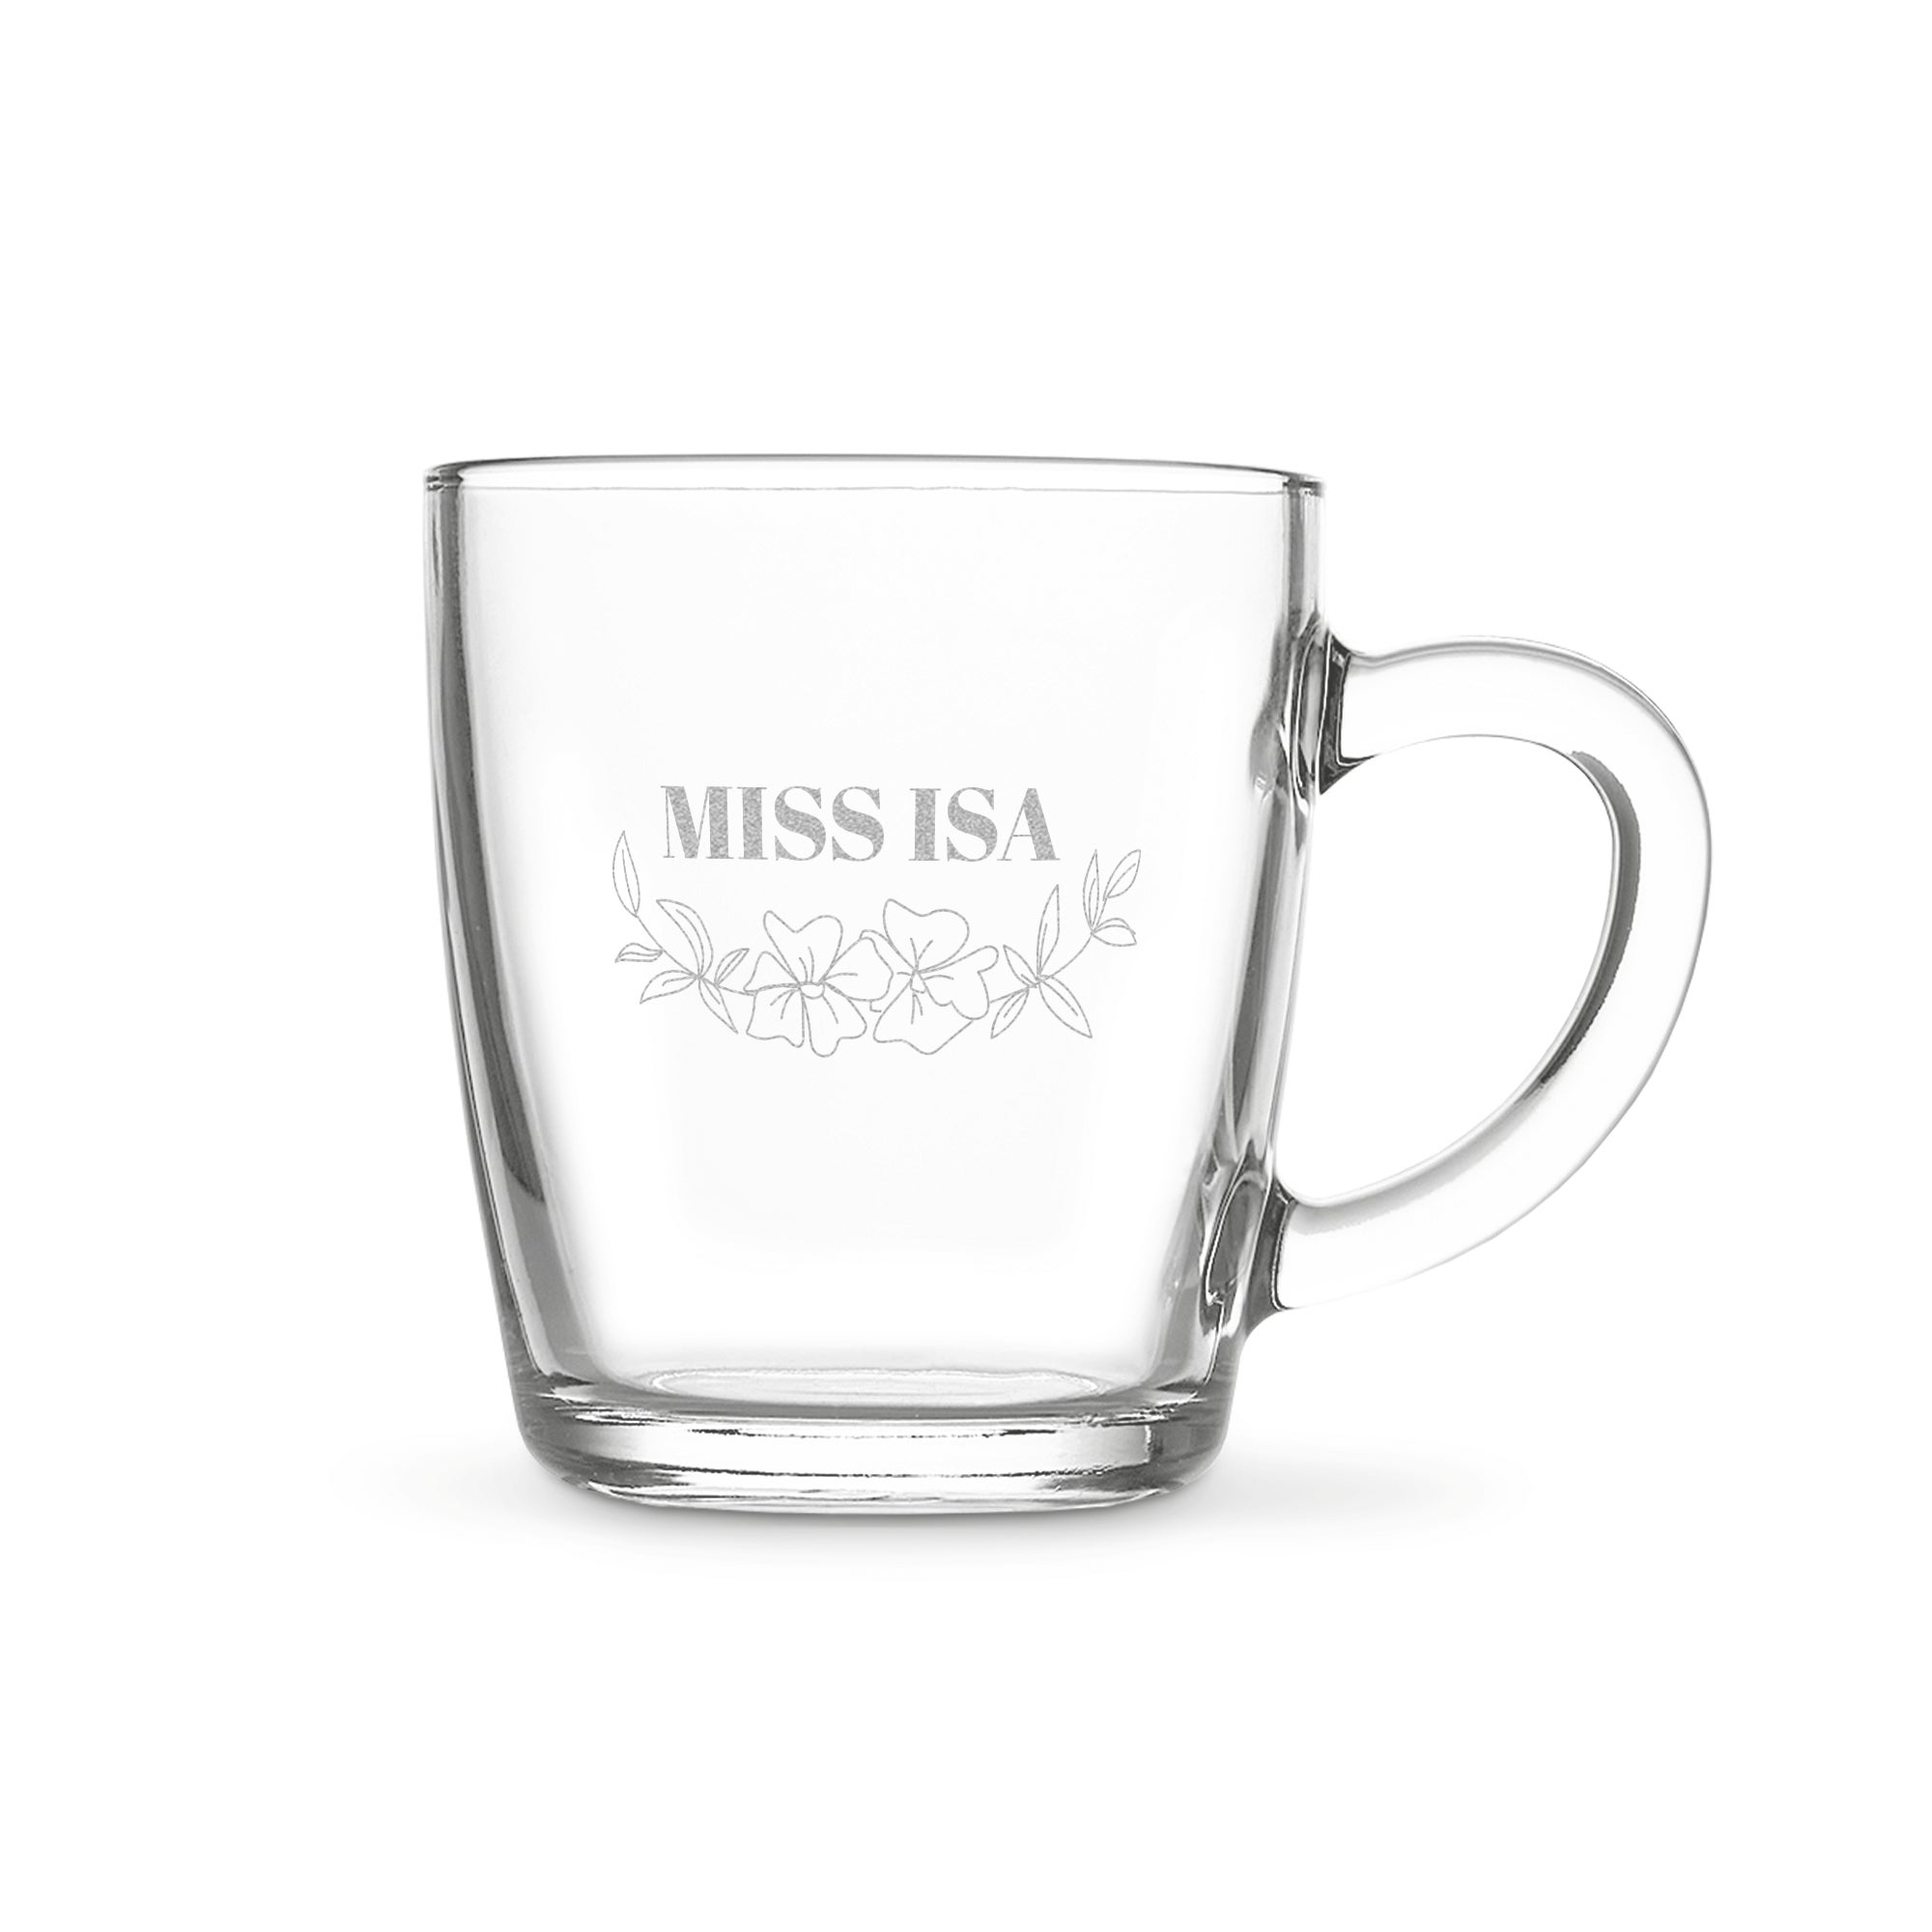 Personalised glass mug - Teacher - Engraved